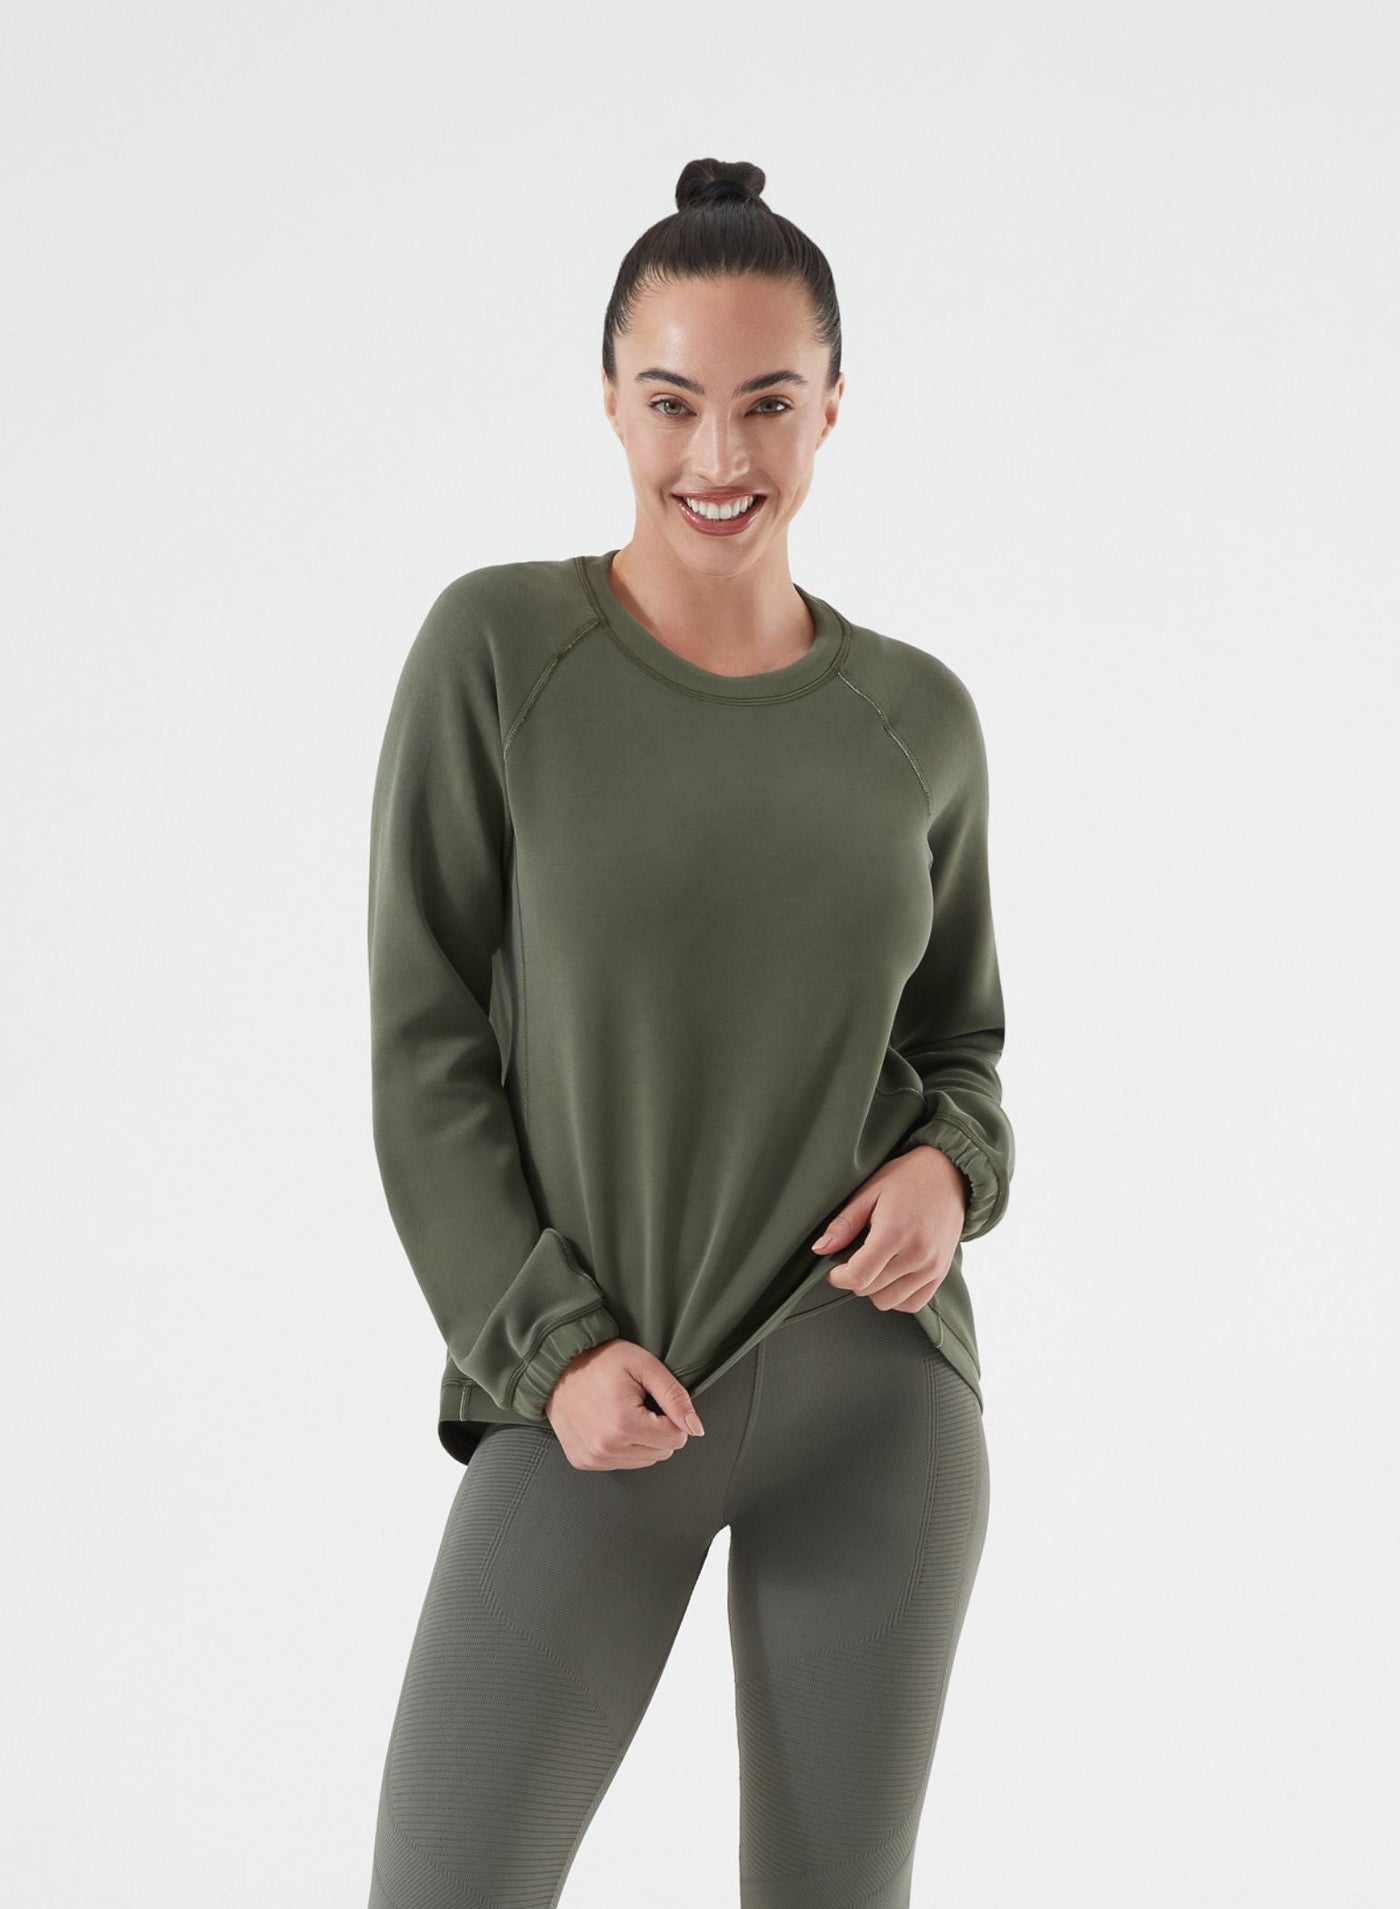 Sleek Sweat - Ultra Soft Relaxed Fit Crew Neck Sweatshirt for Women